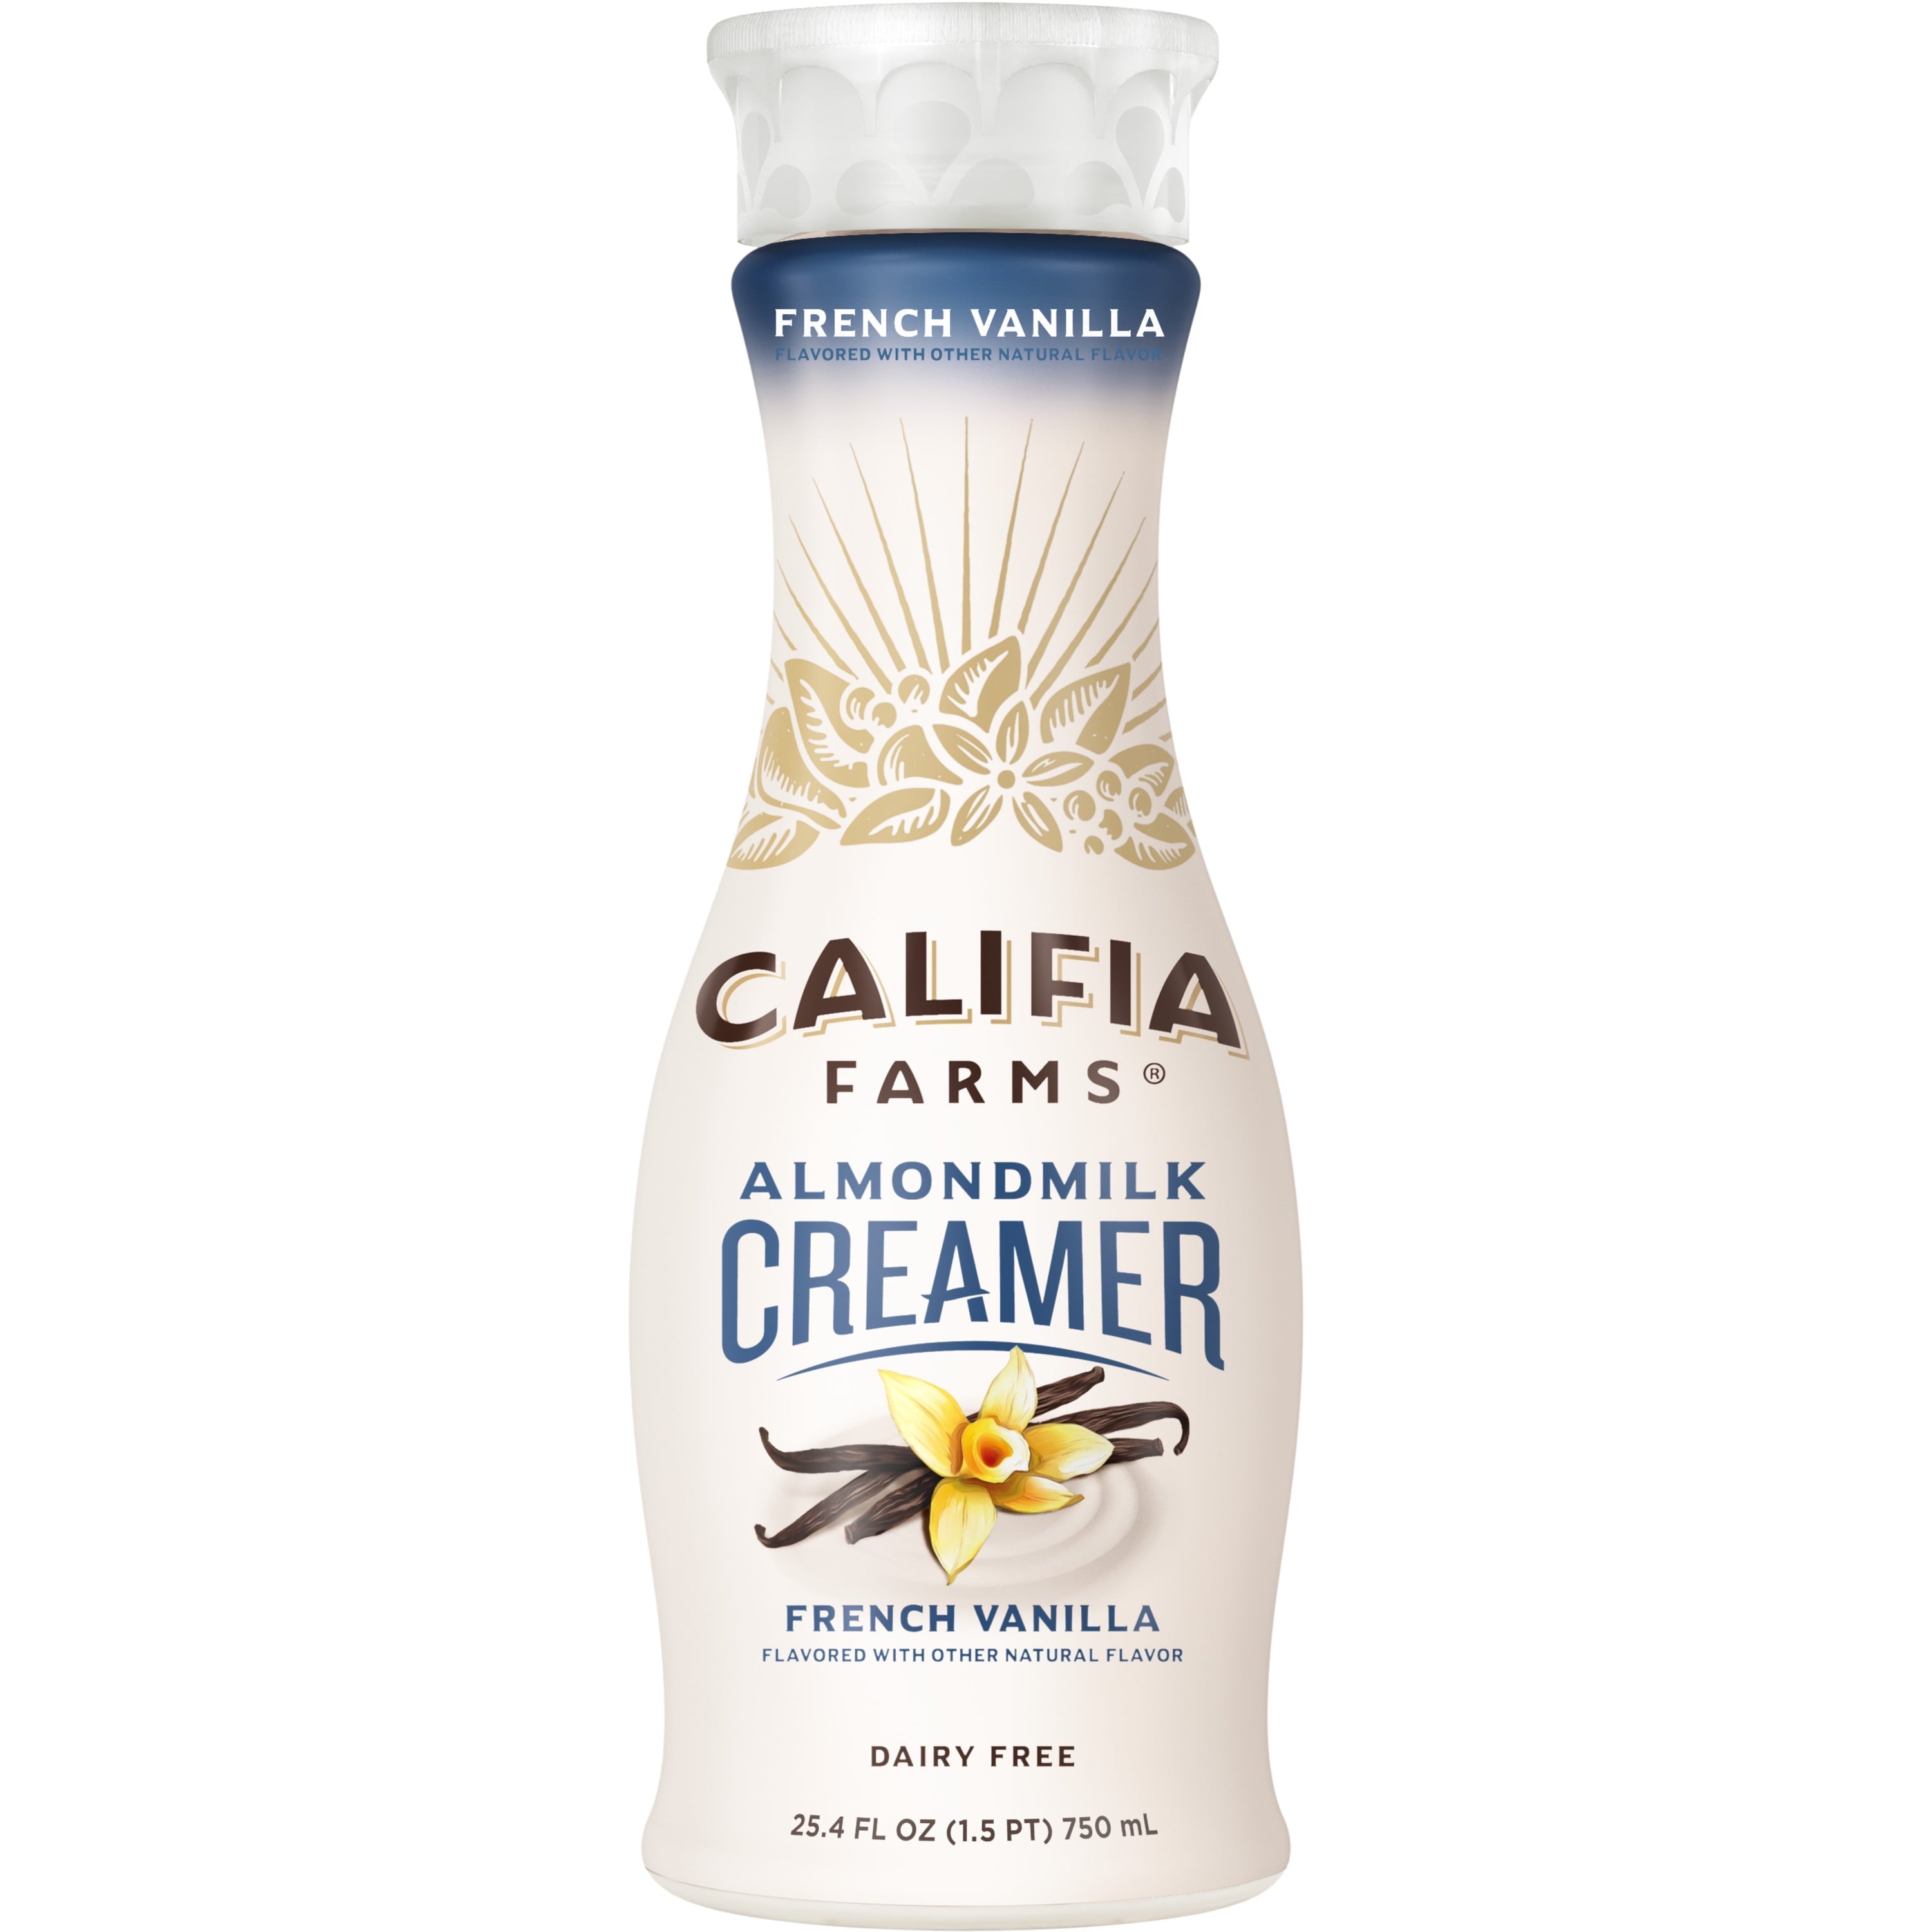 Califia French Vanilla Almondmilk Creamer 25.4 Fl Oz Bottle